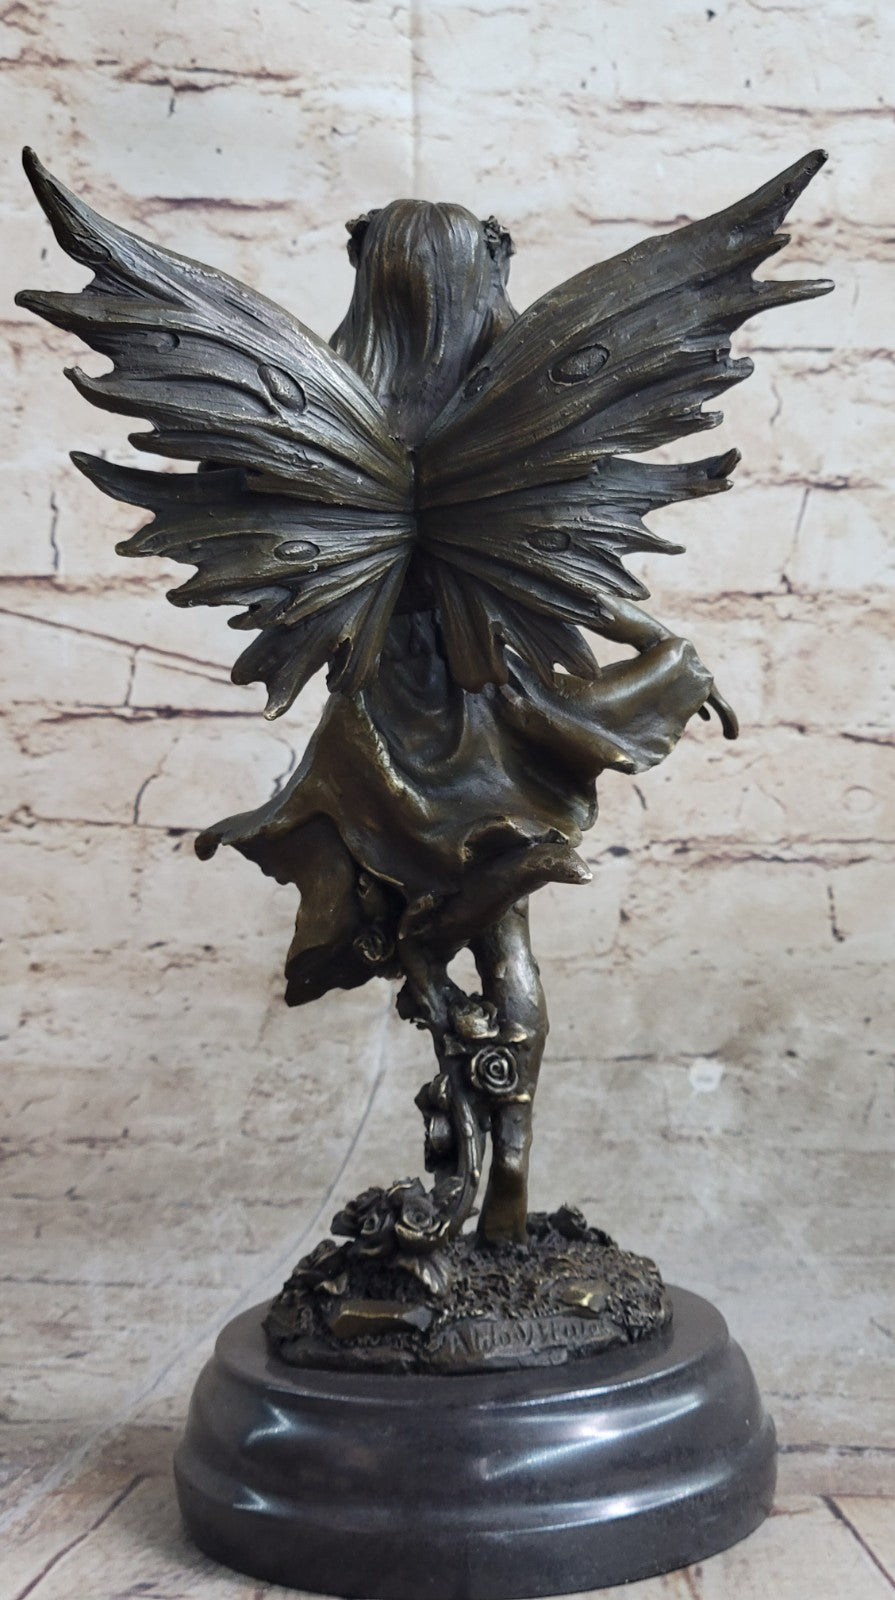 Handcrafted bronze sculpture SALE by VITALEH Italian Artist Angel Fairy Gift